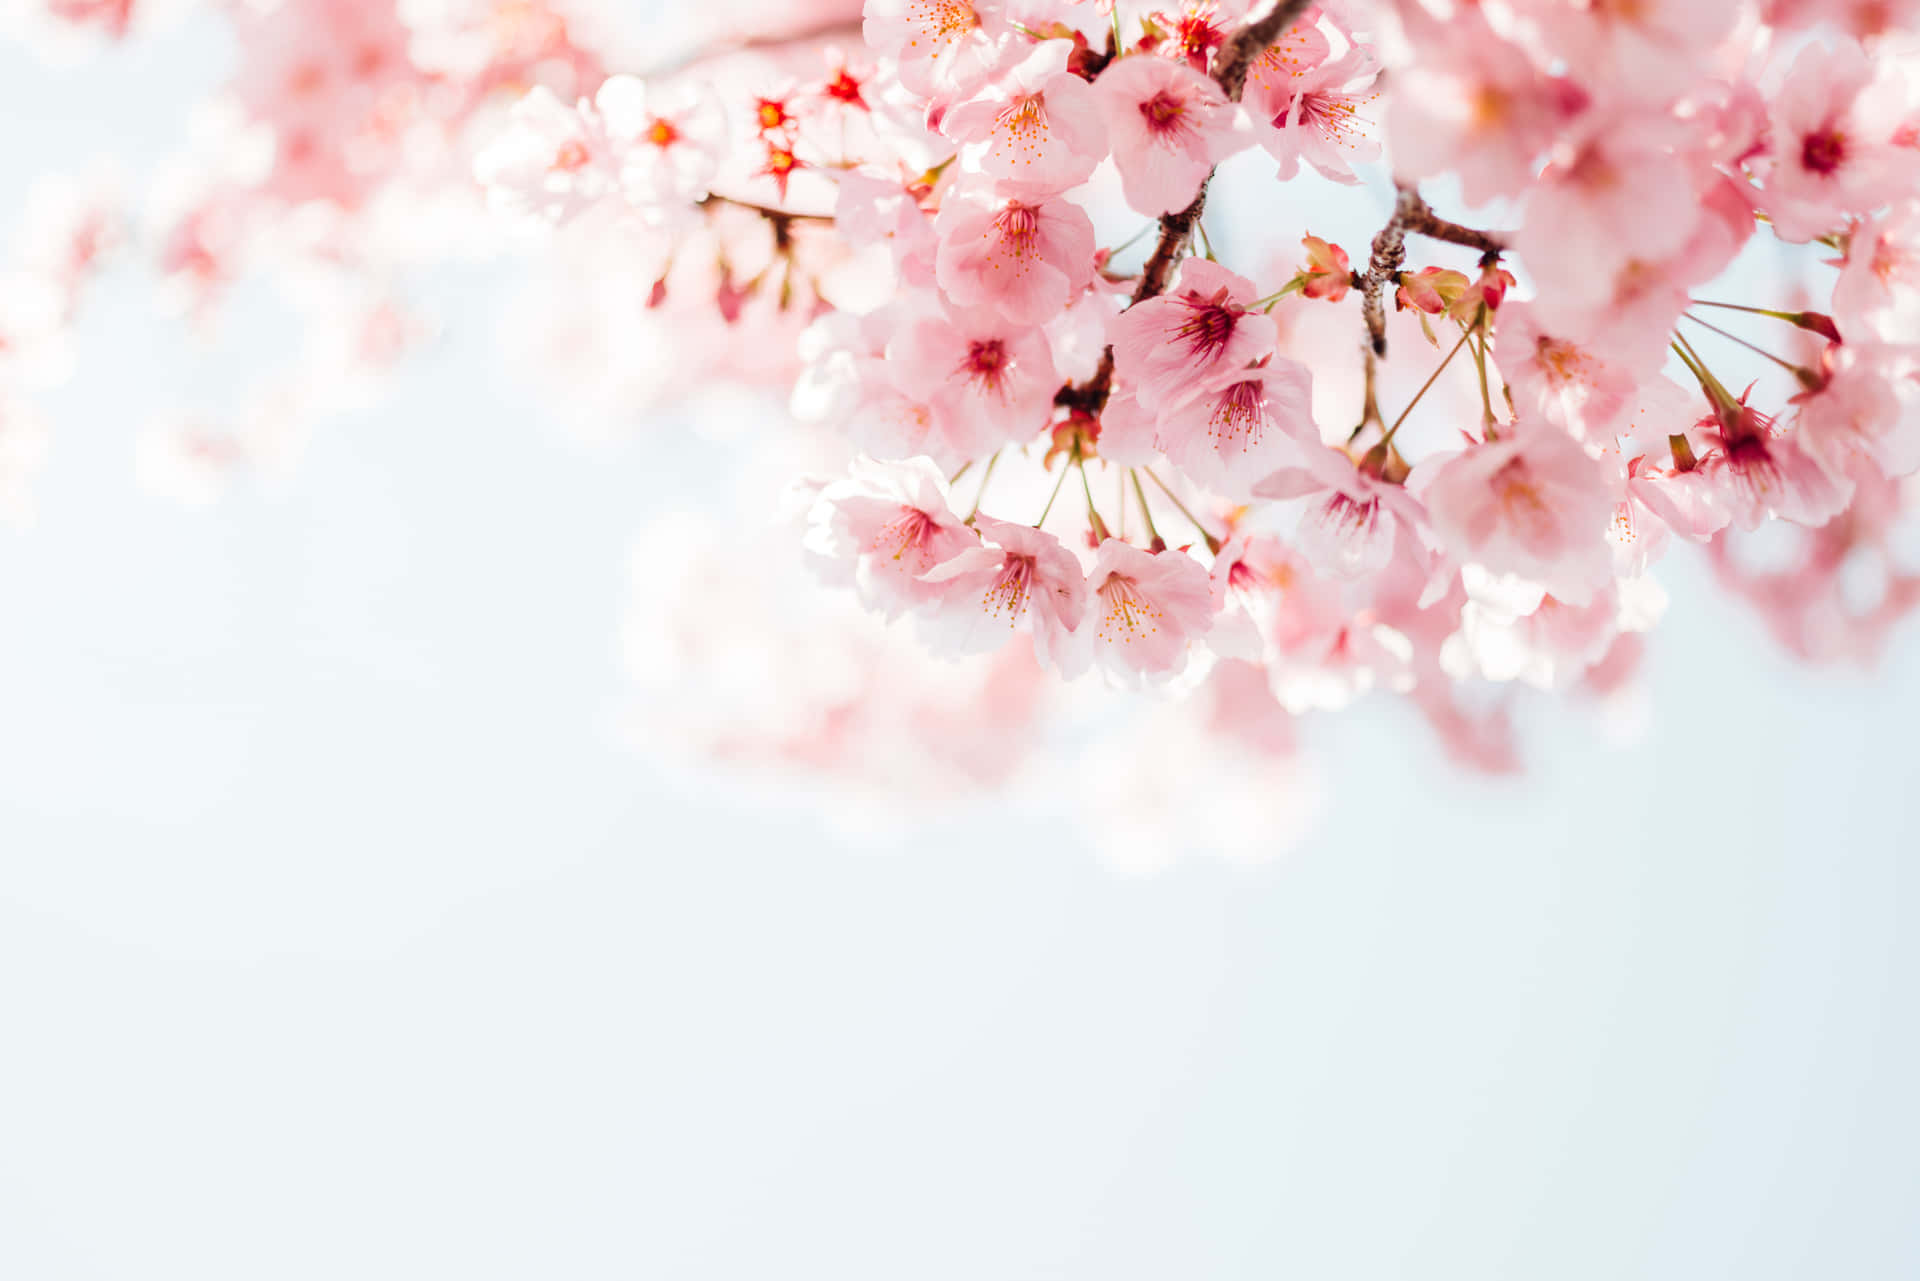 Pink Cherry Blossom 3680 X 2456 Wallpaper